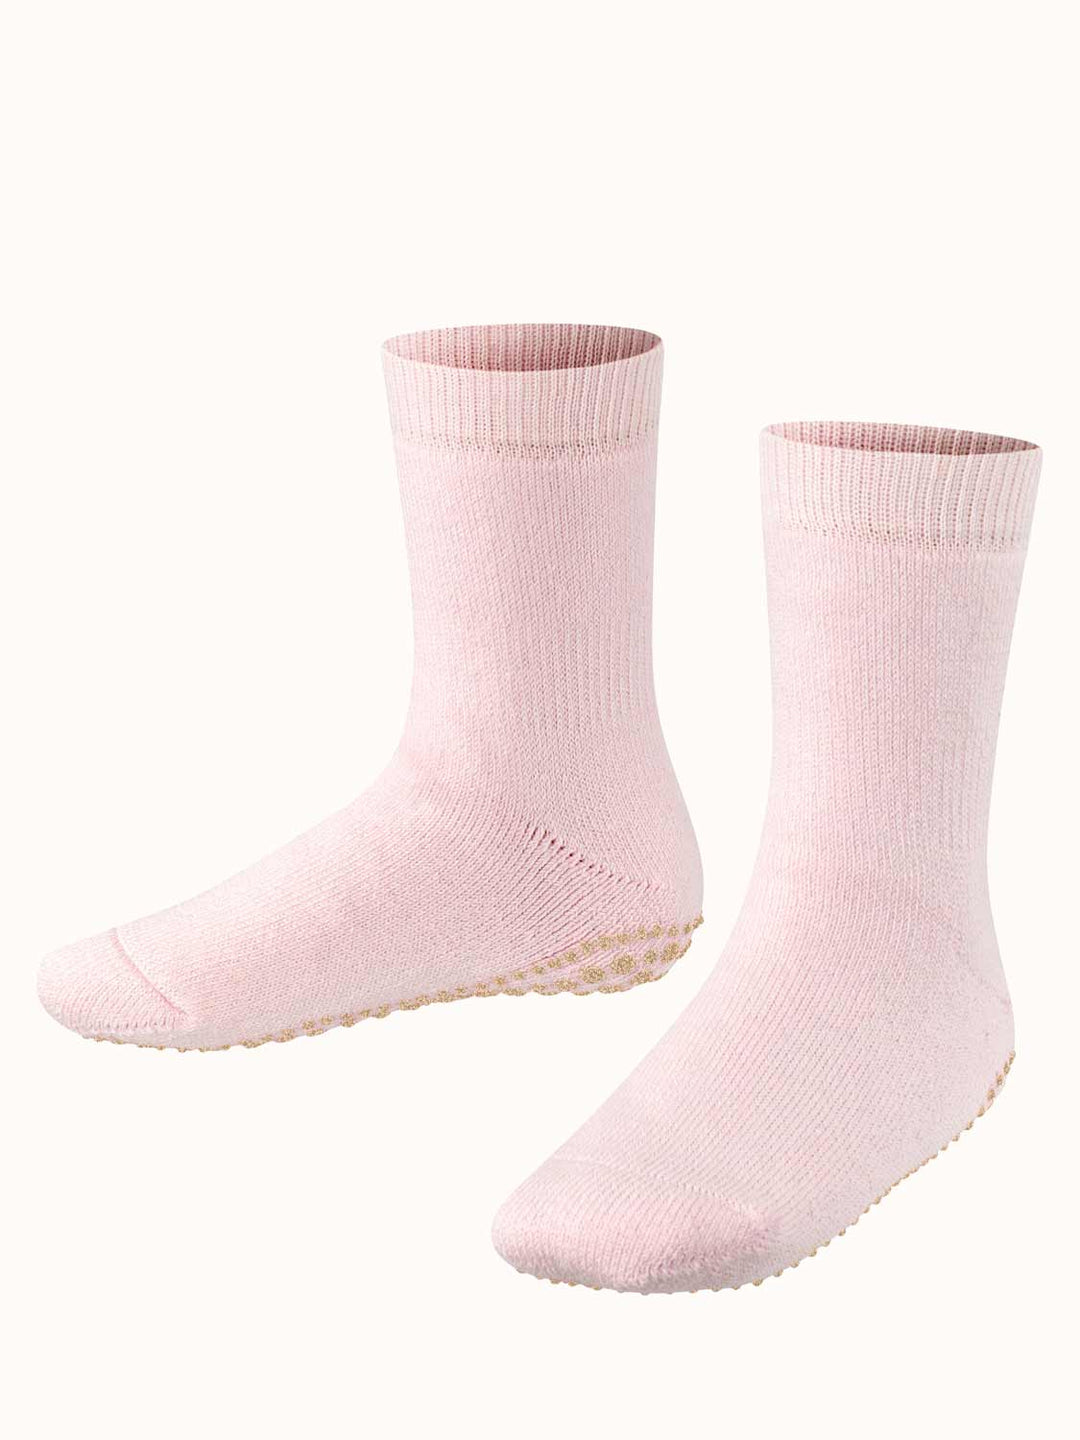 FALKE CATSPADS COTTON SOFT-TOP SUITABLE FOR DIABETICS - Socks - brick/light  pink - Zalando.de